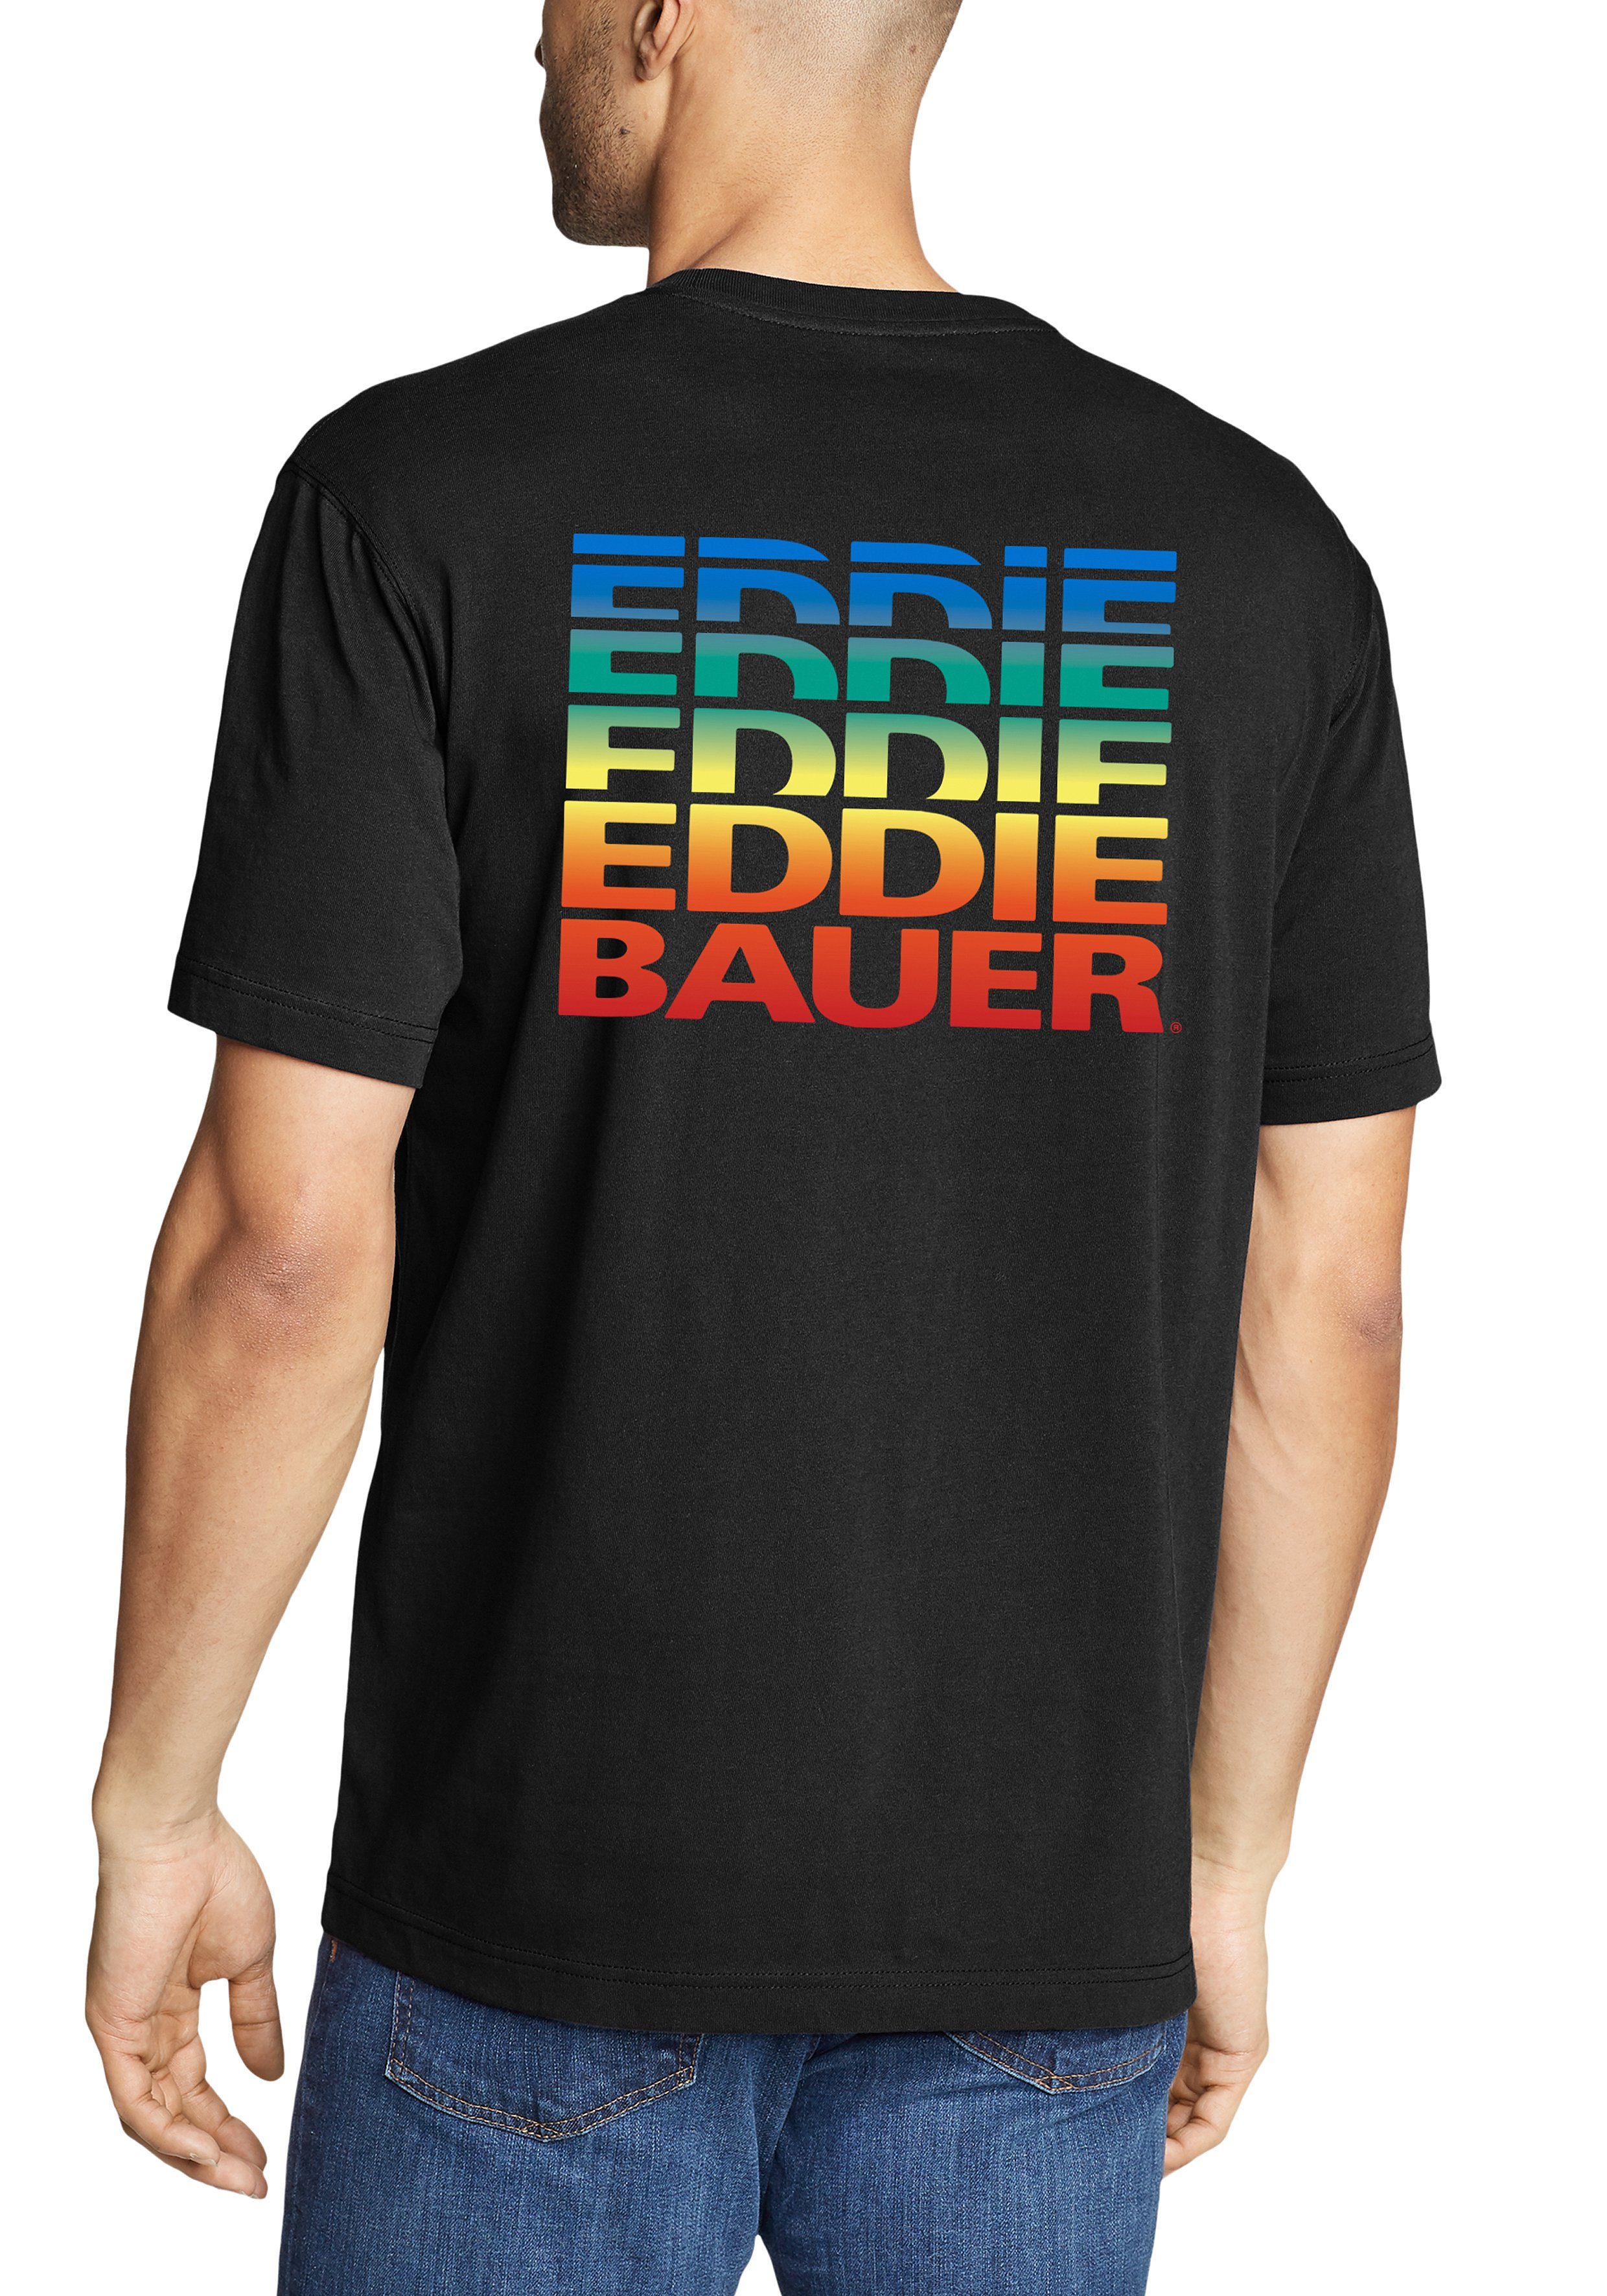 Bauer EB Pride Graphic T-Shirt Eddie T-Shirt